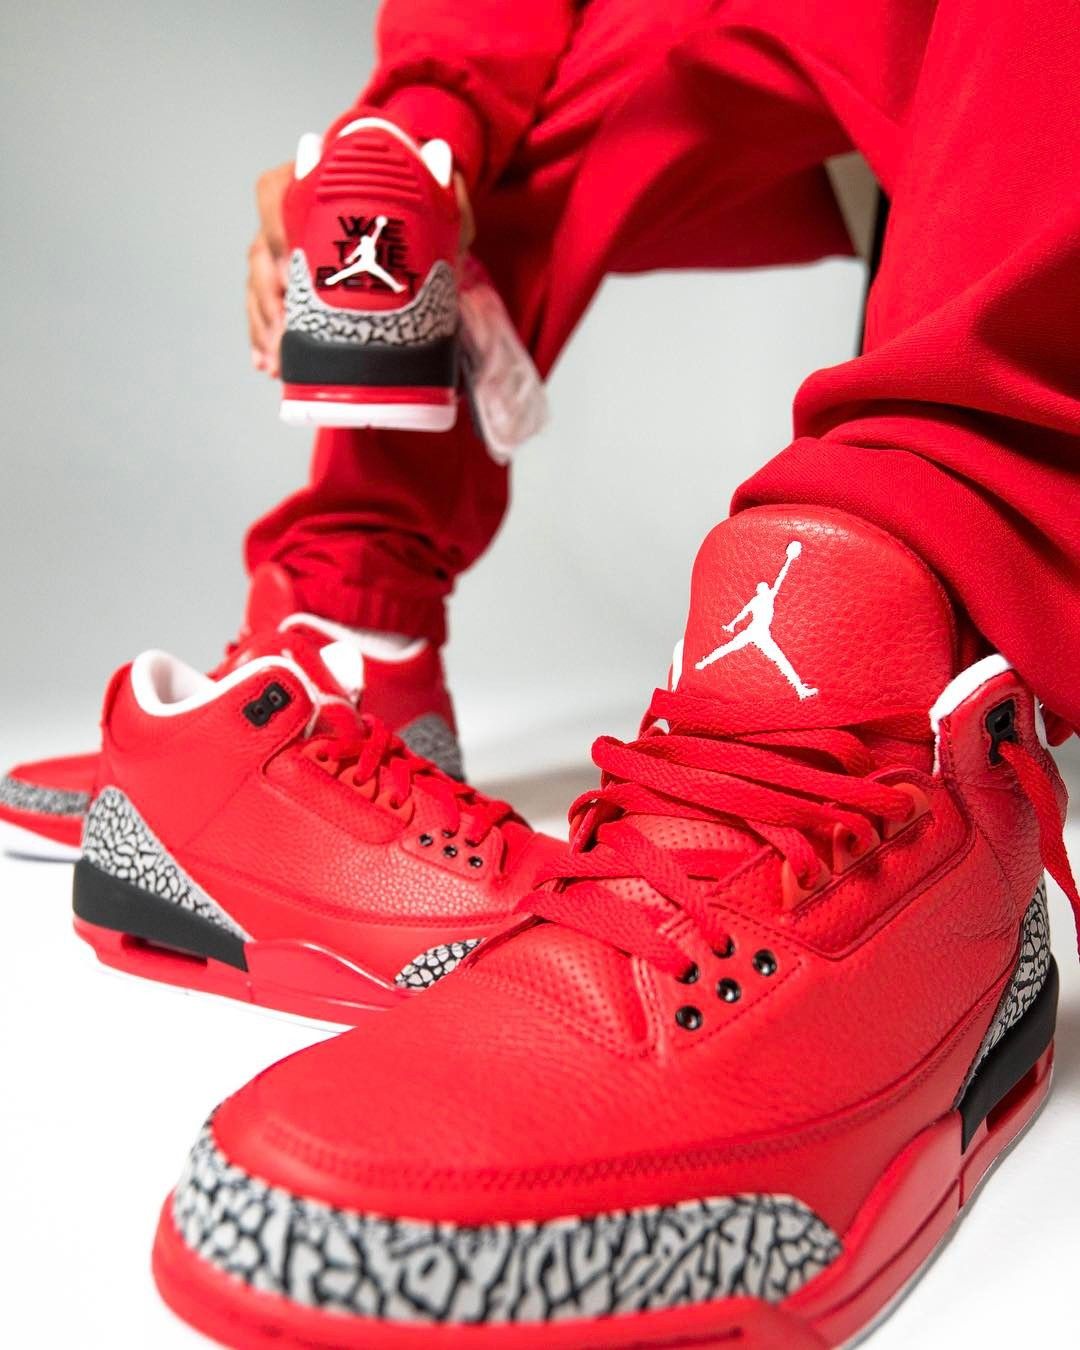 DJ Khaled and Jordan Release New Sneaker Collaboration, Photos